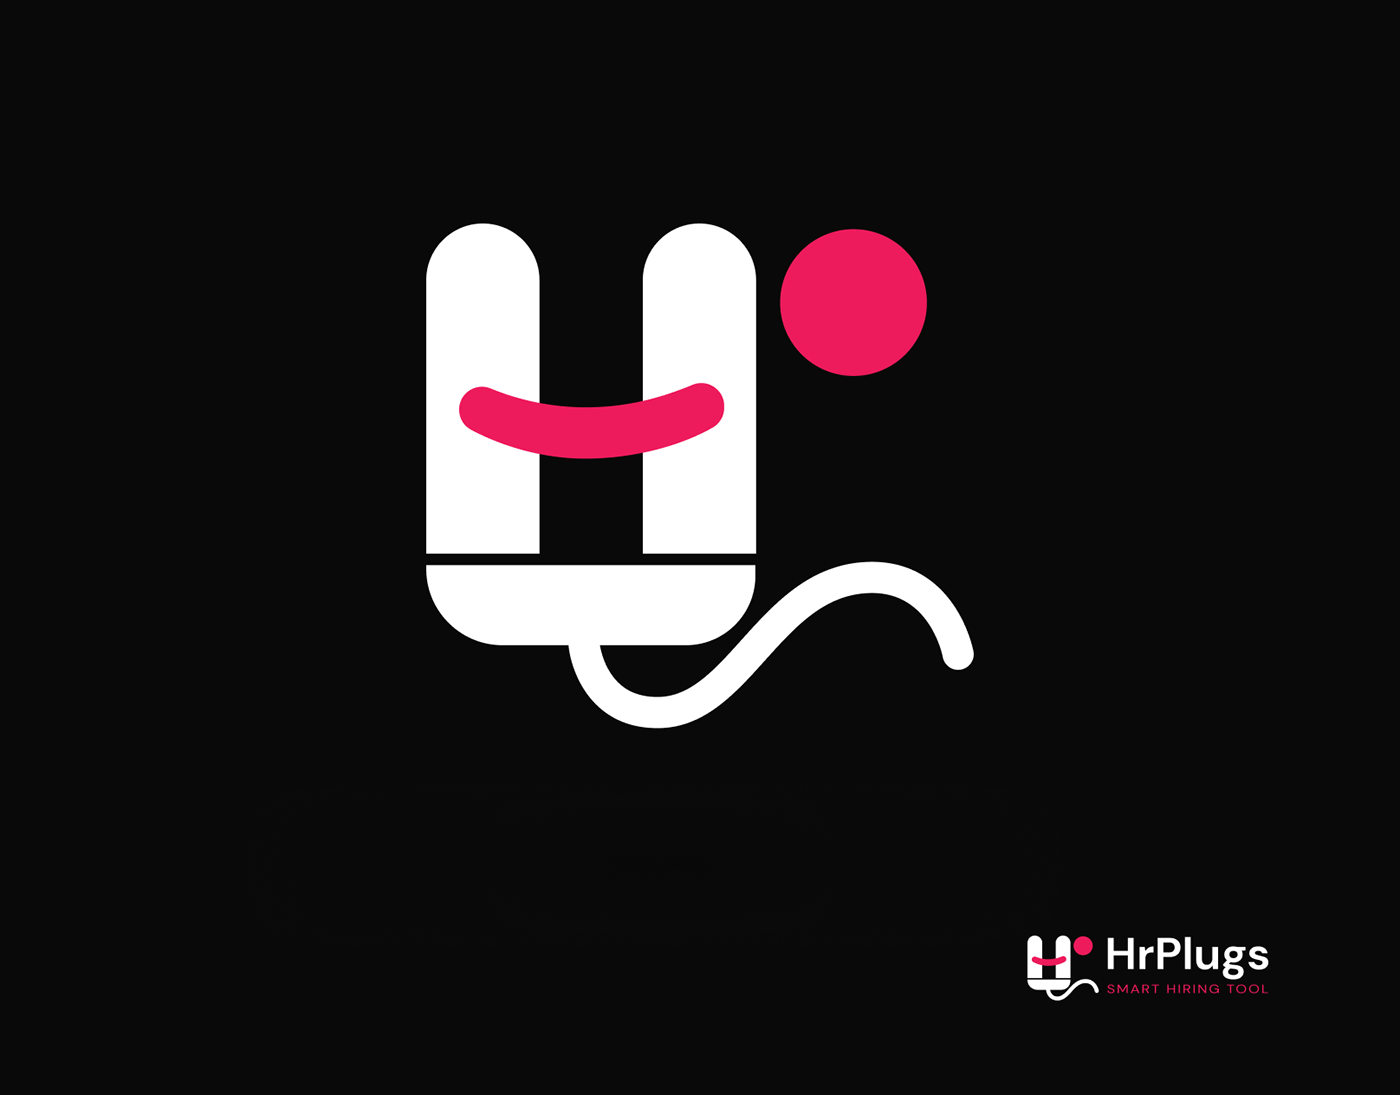 logo Logo Design brand identity Logotype Brand Design HR Plug job portal management software